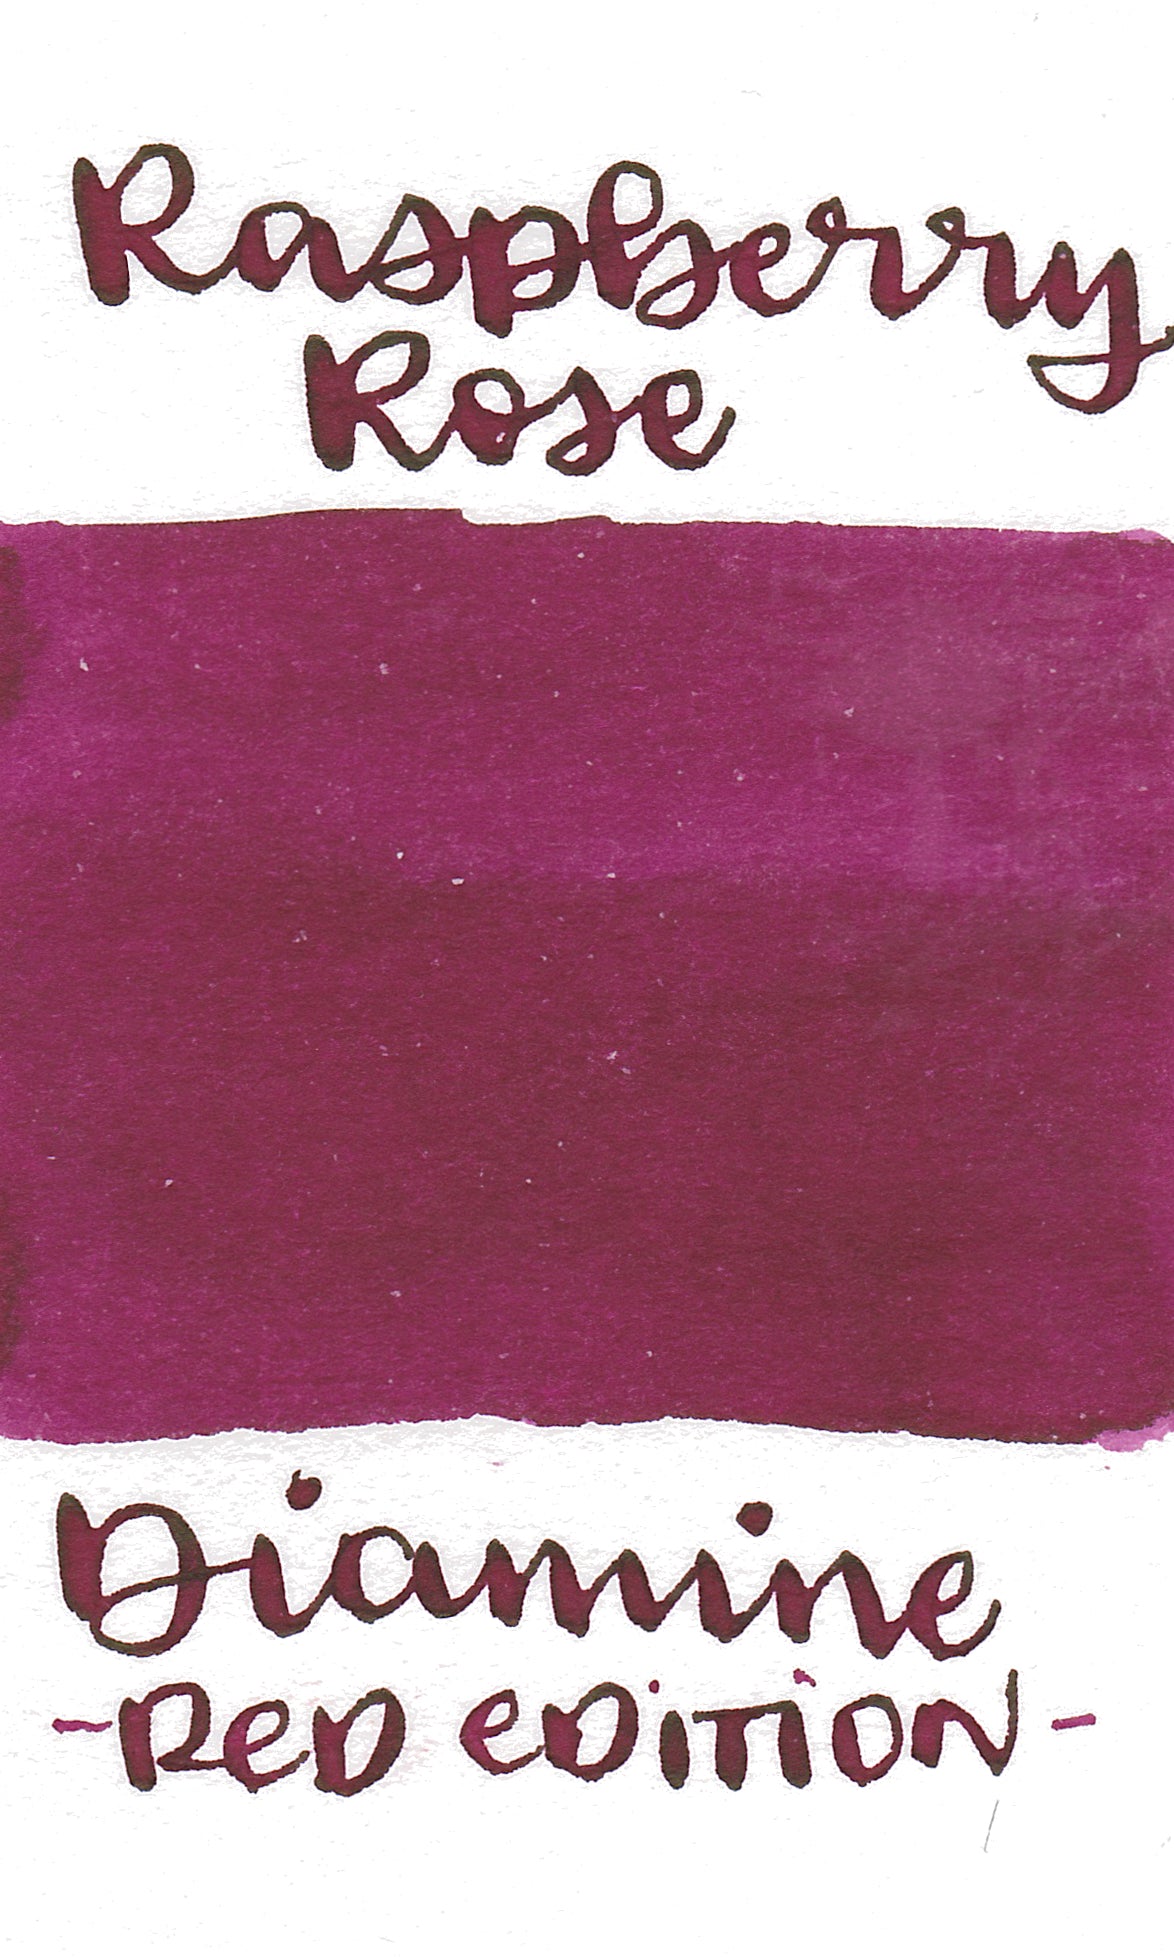 Diamine Red Edition Raspberry Rose